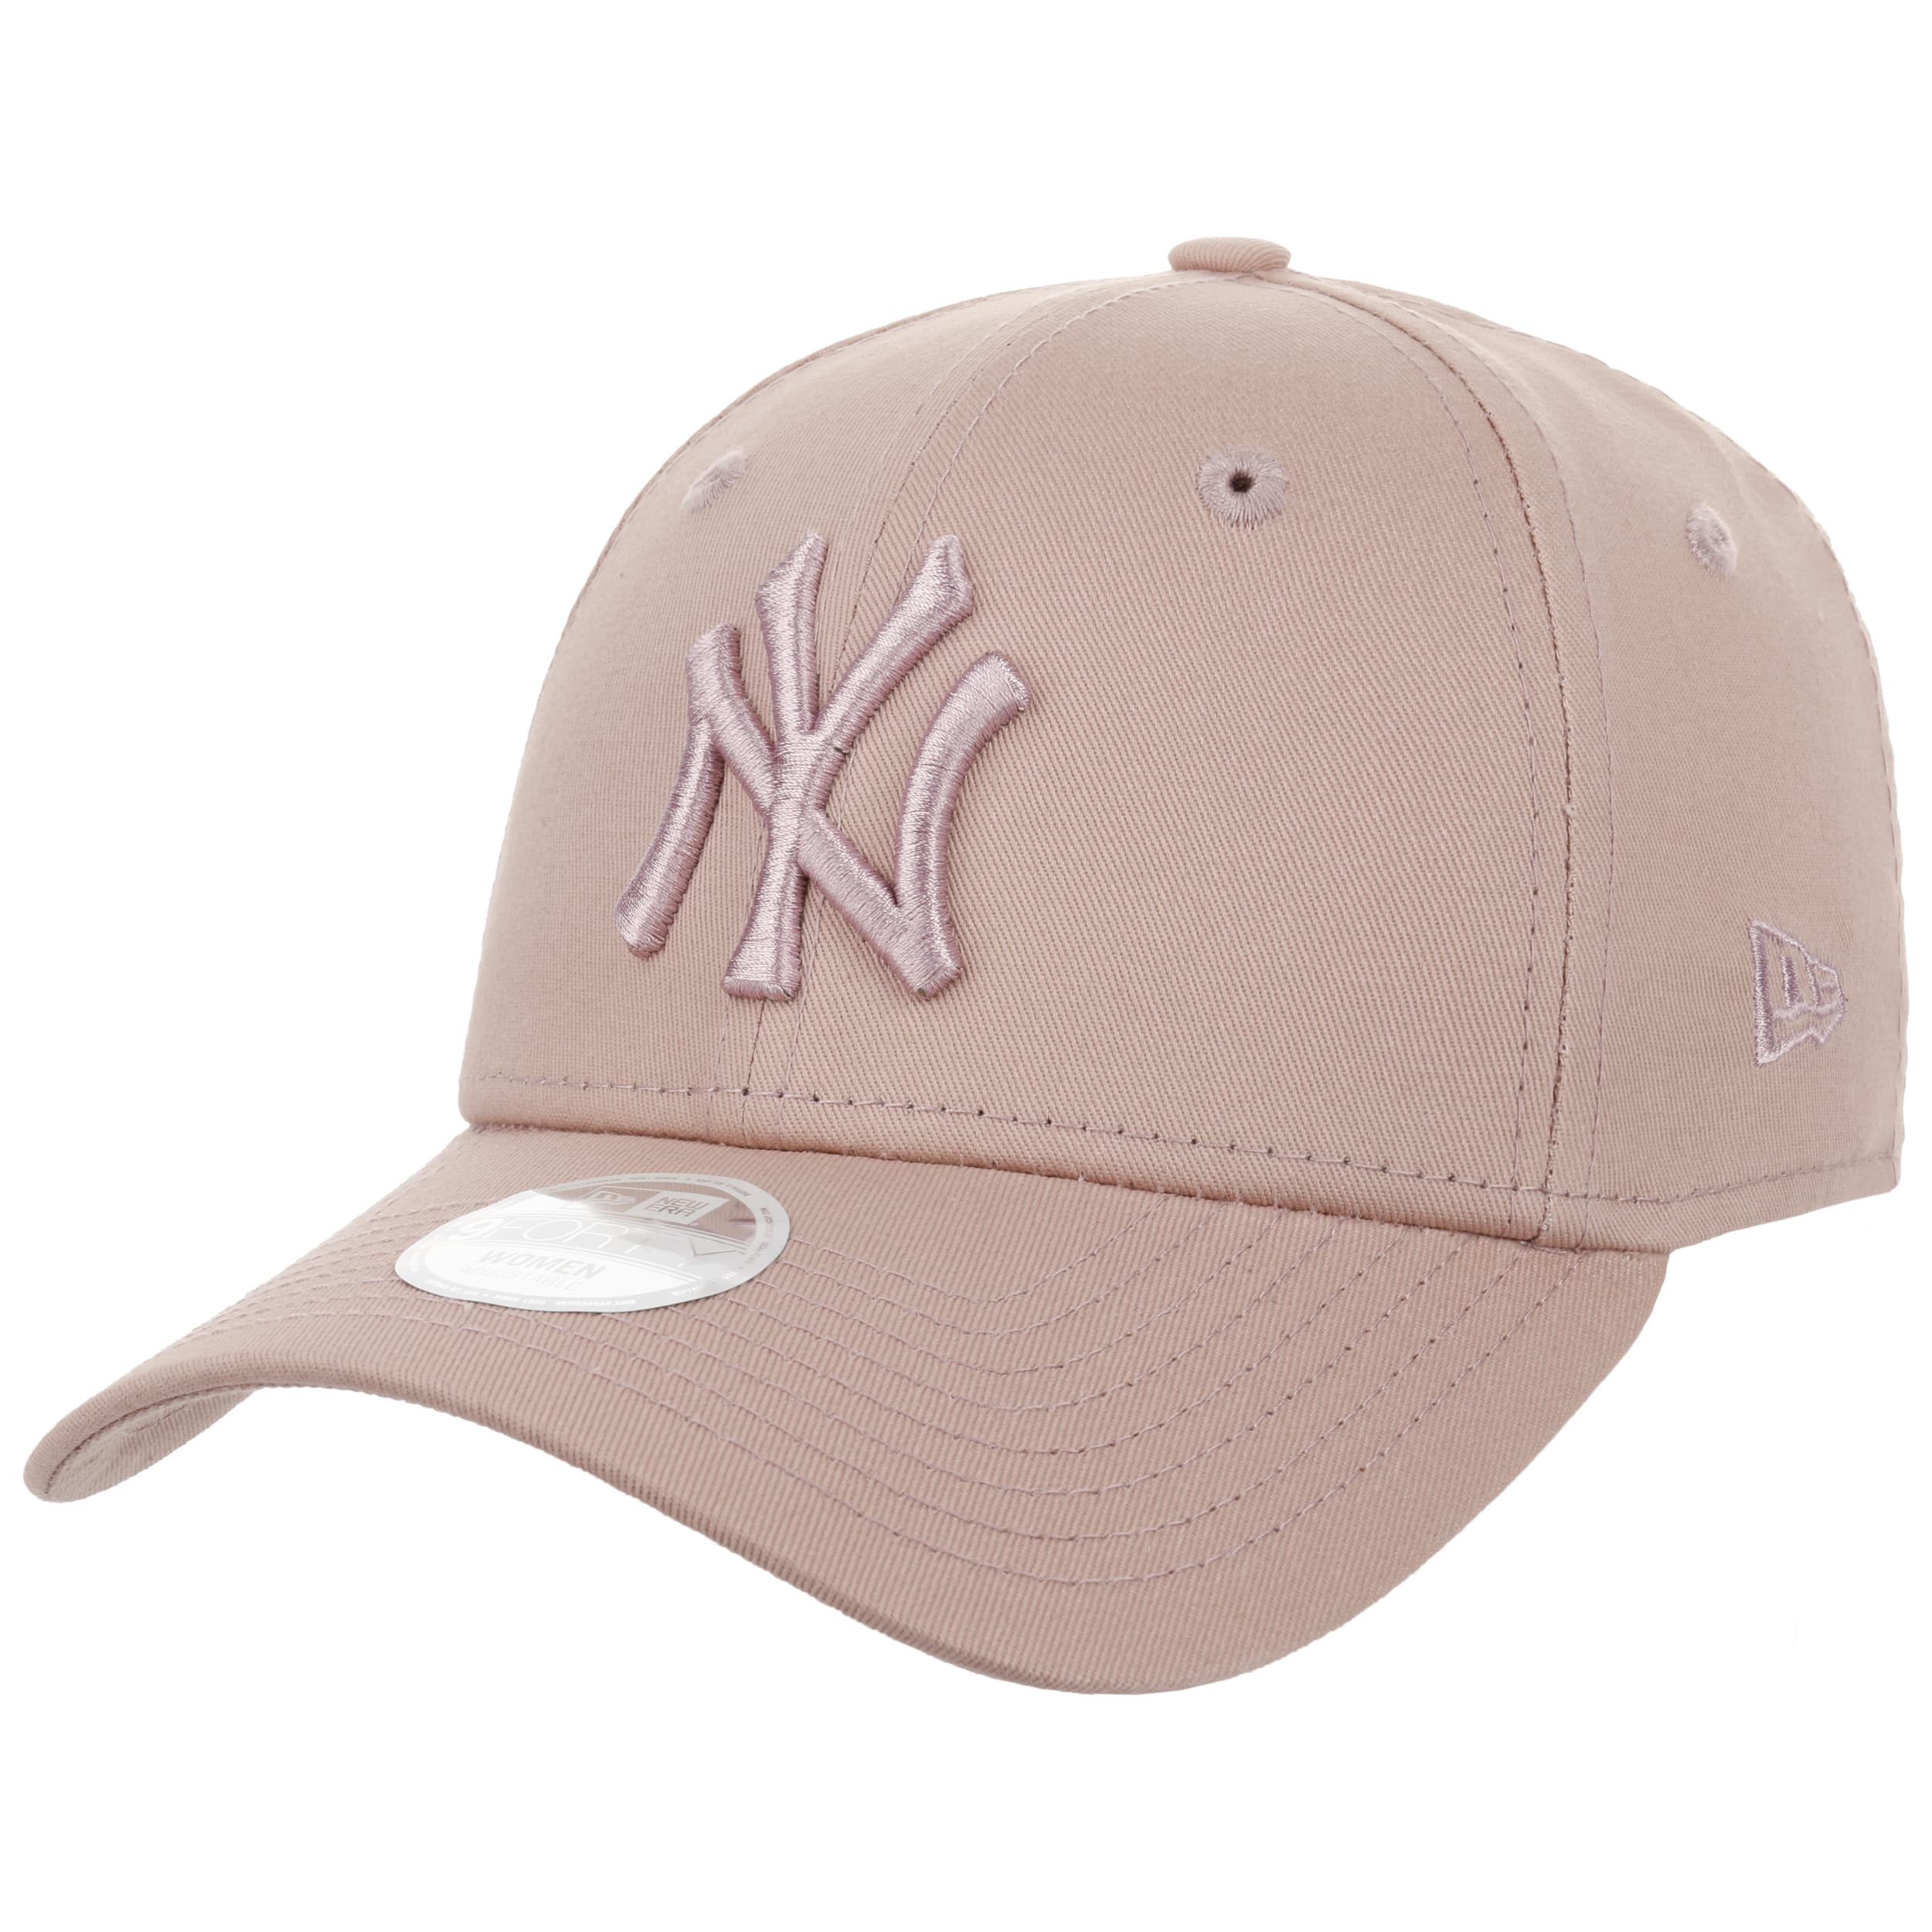 New Era - New York Yankees - Women's 9FORTY Cap - Pink Tonal